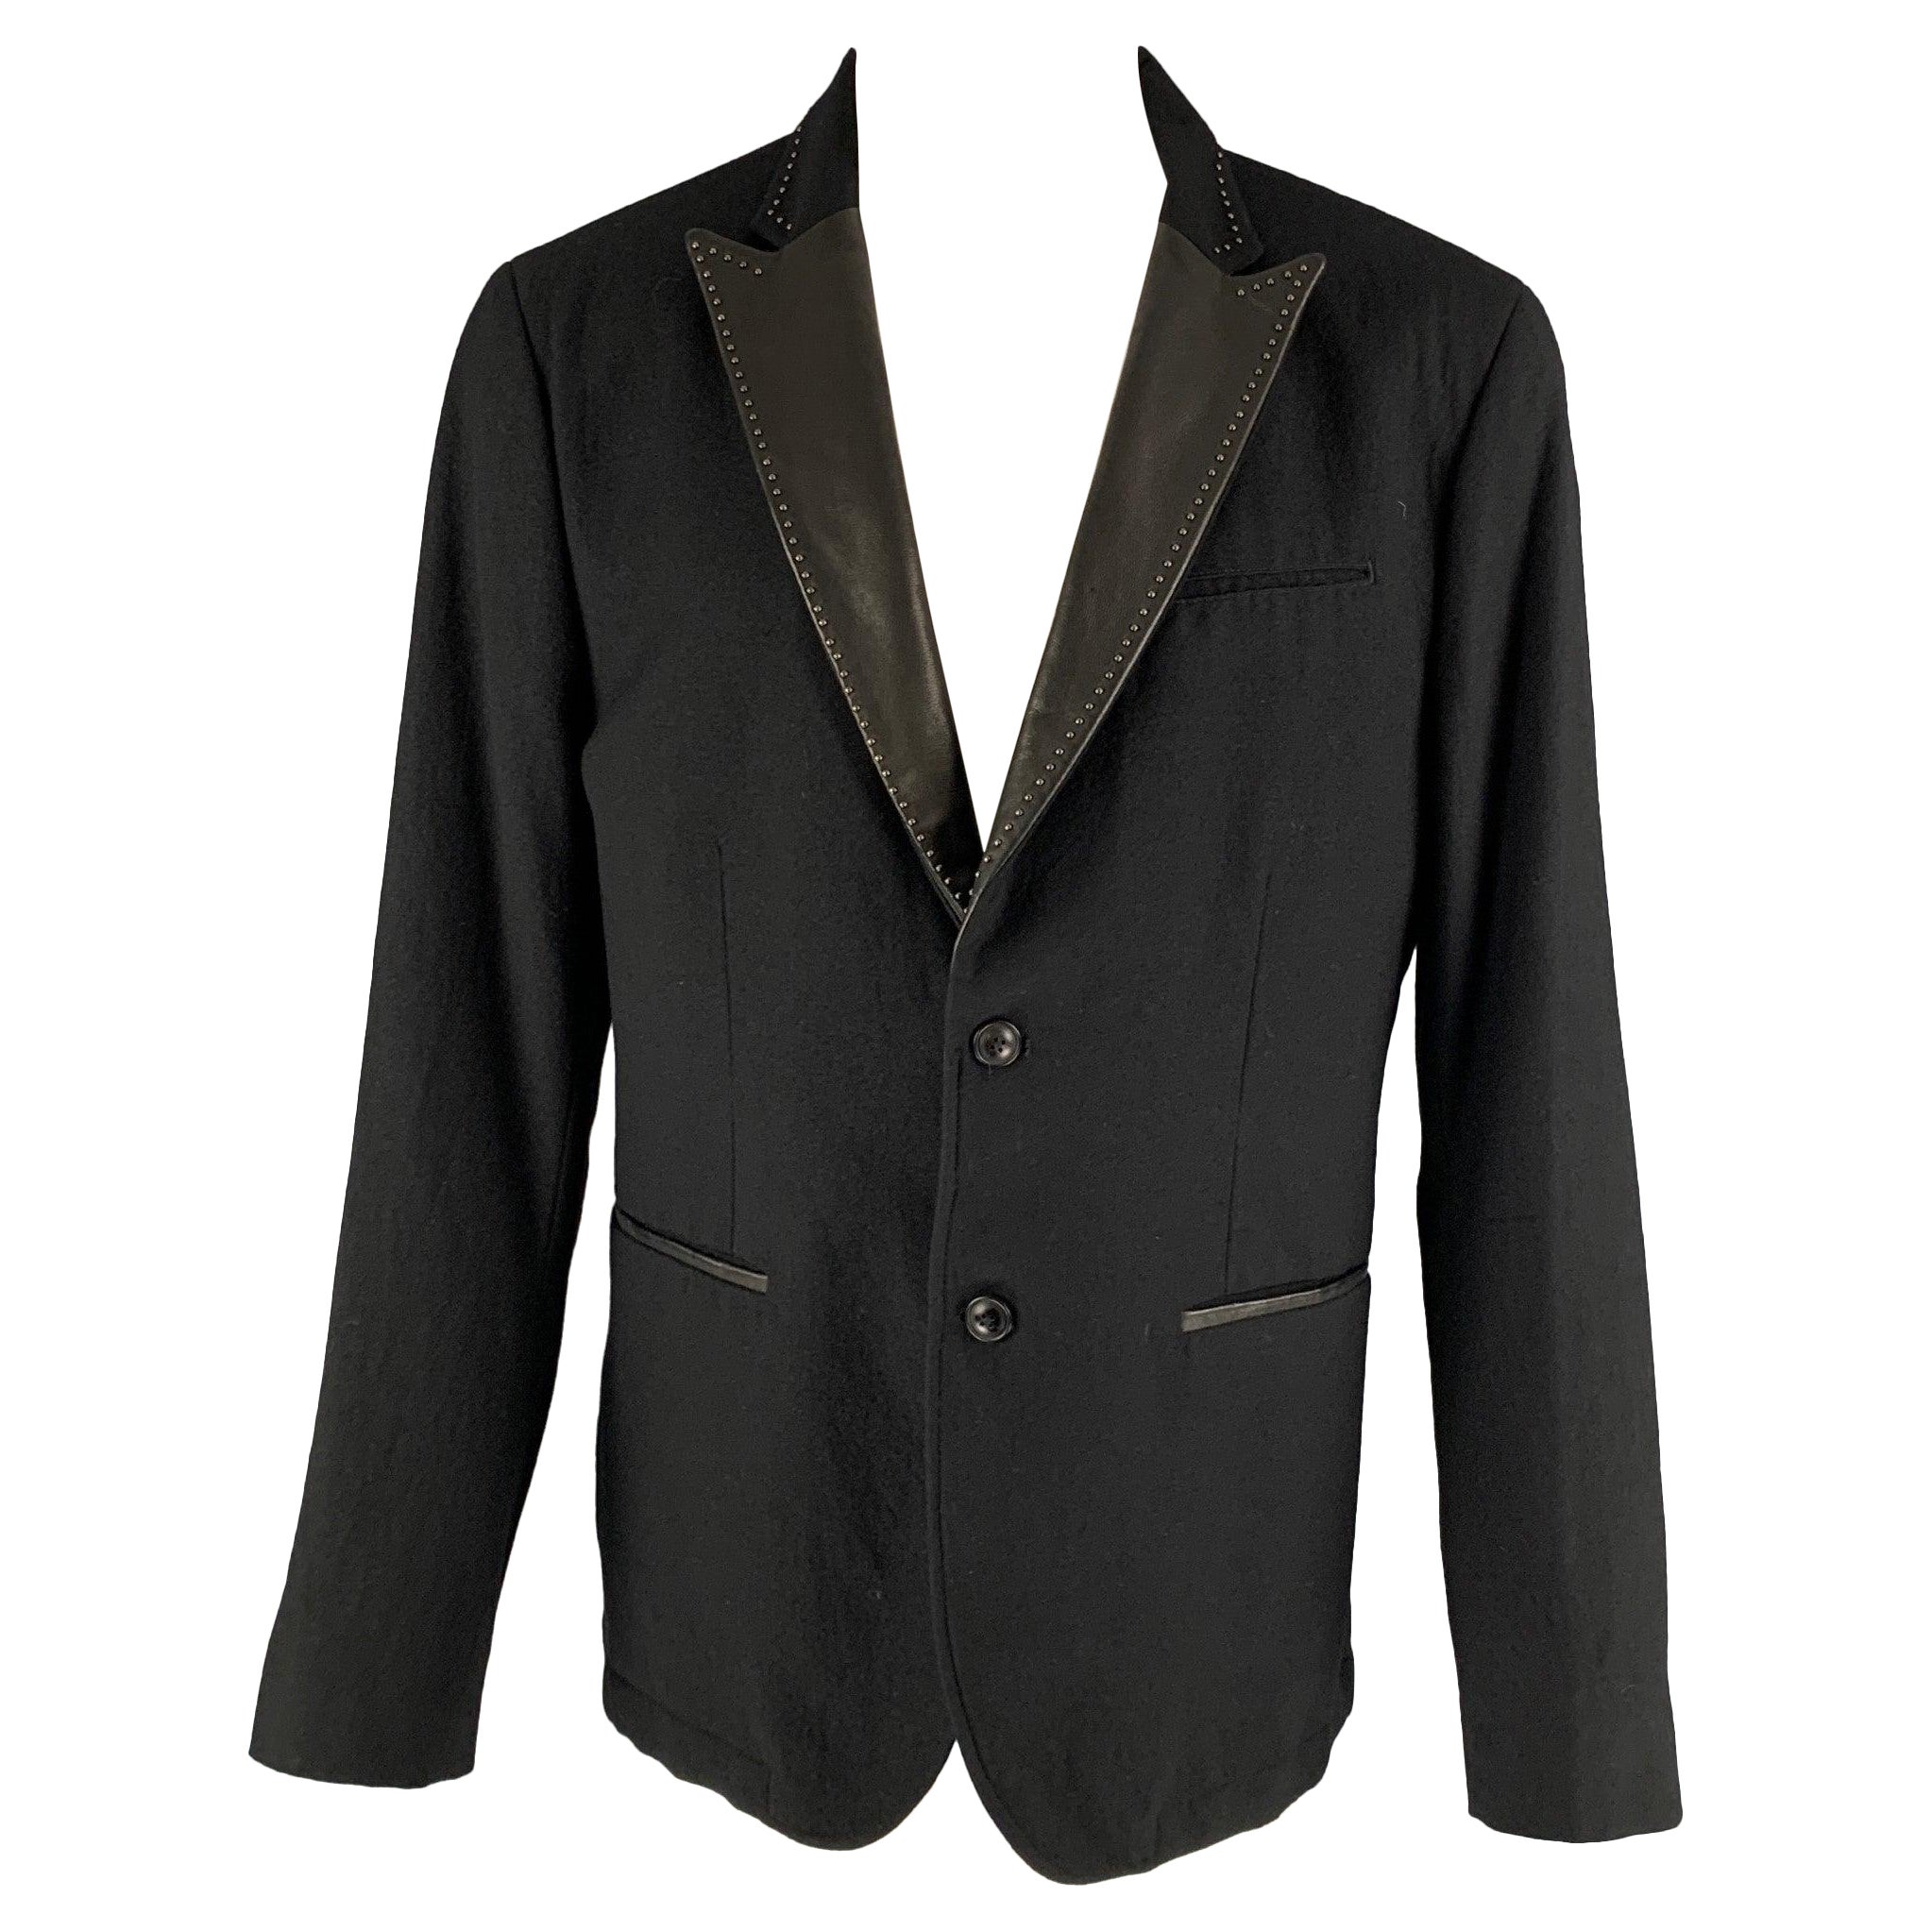 JOHN VARVATOS Size 38 Black Solid Wool Peak Lapel Sport Coat For Sale